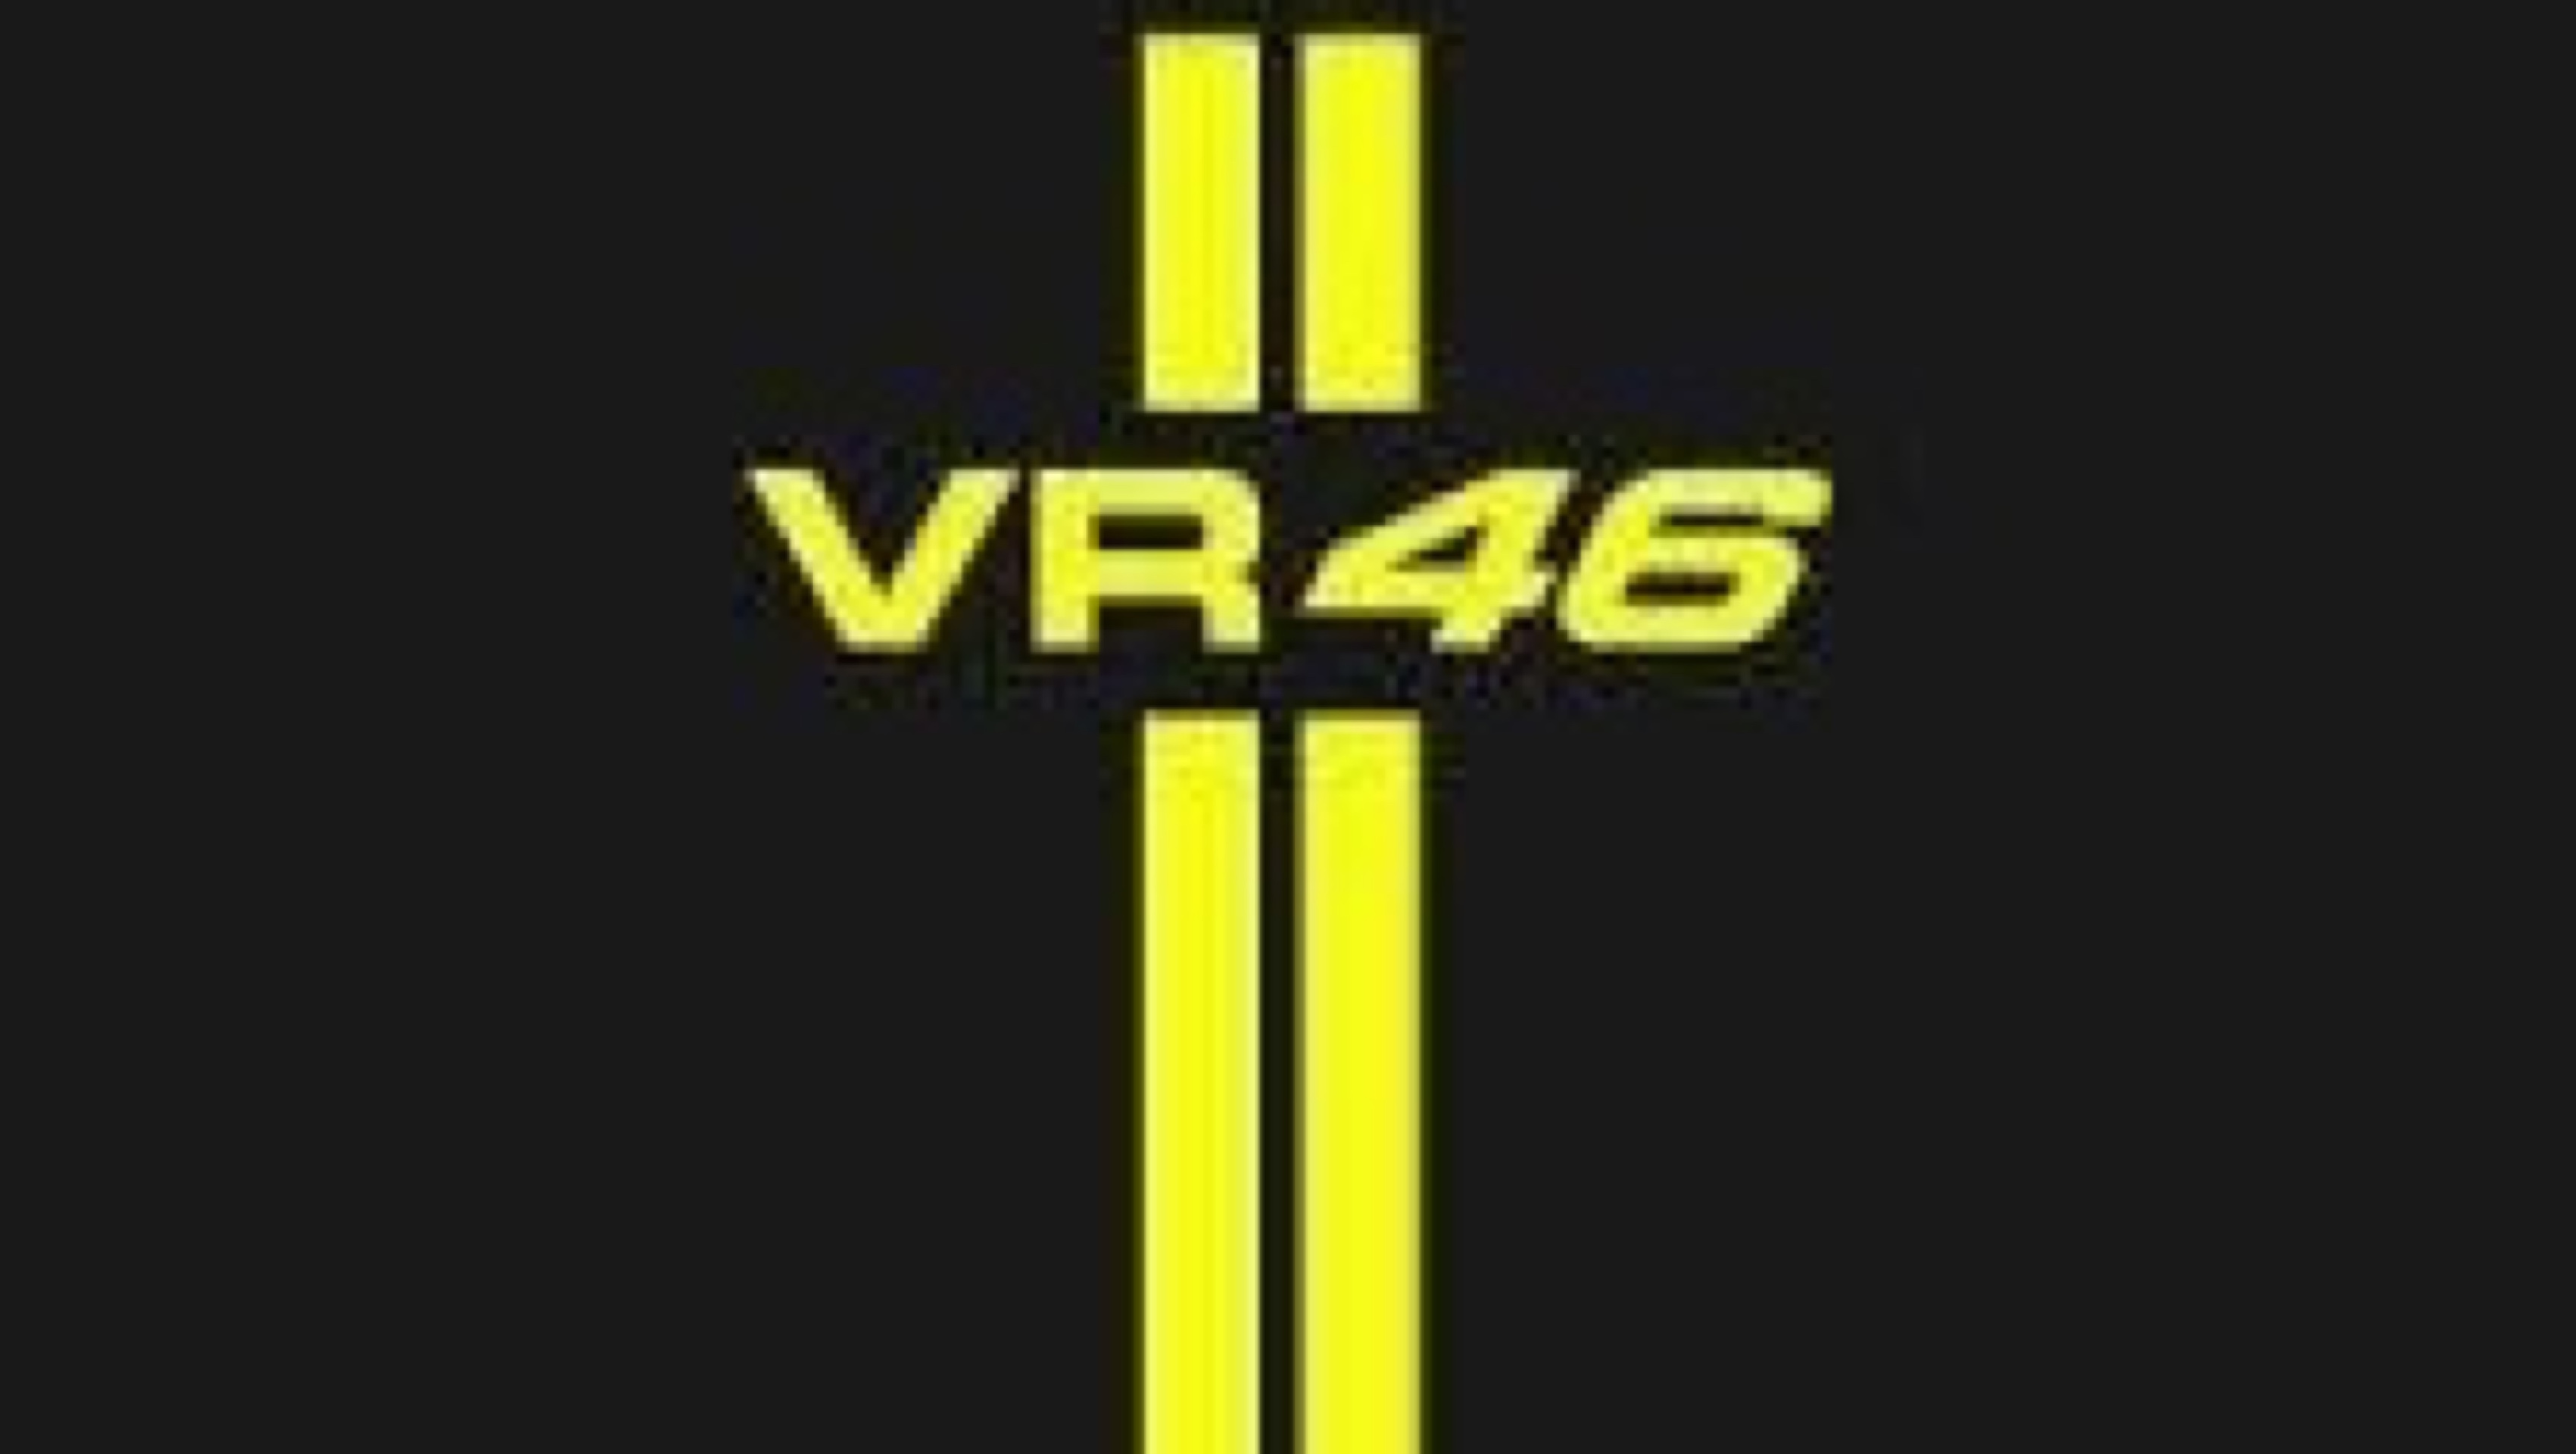 Vr46 logo